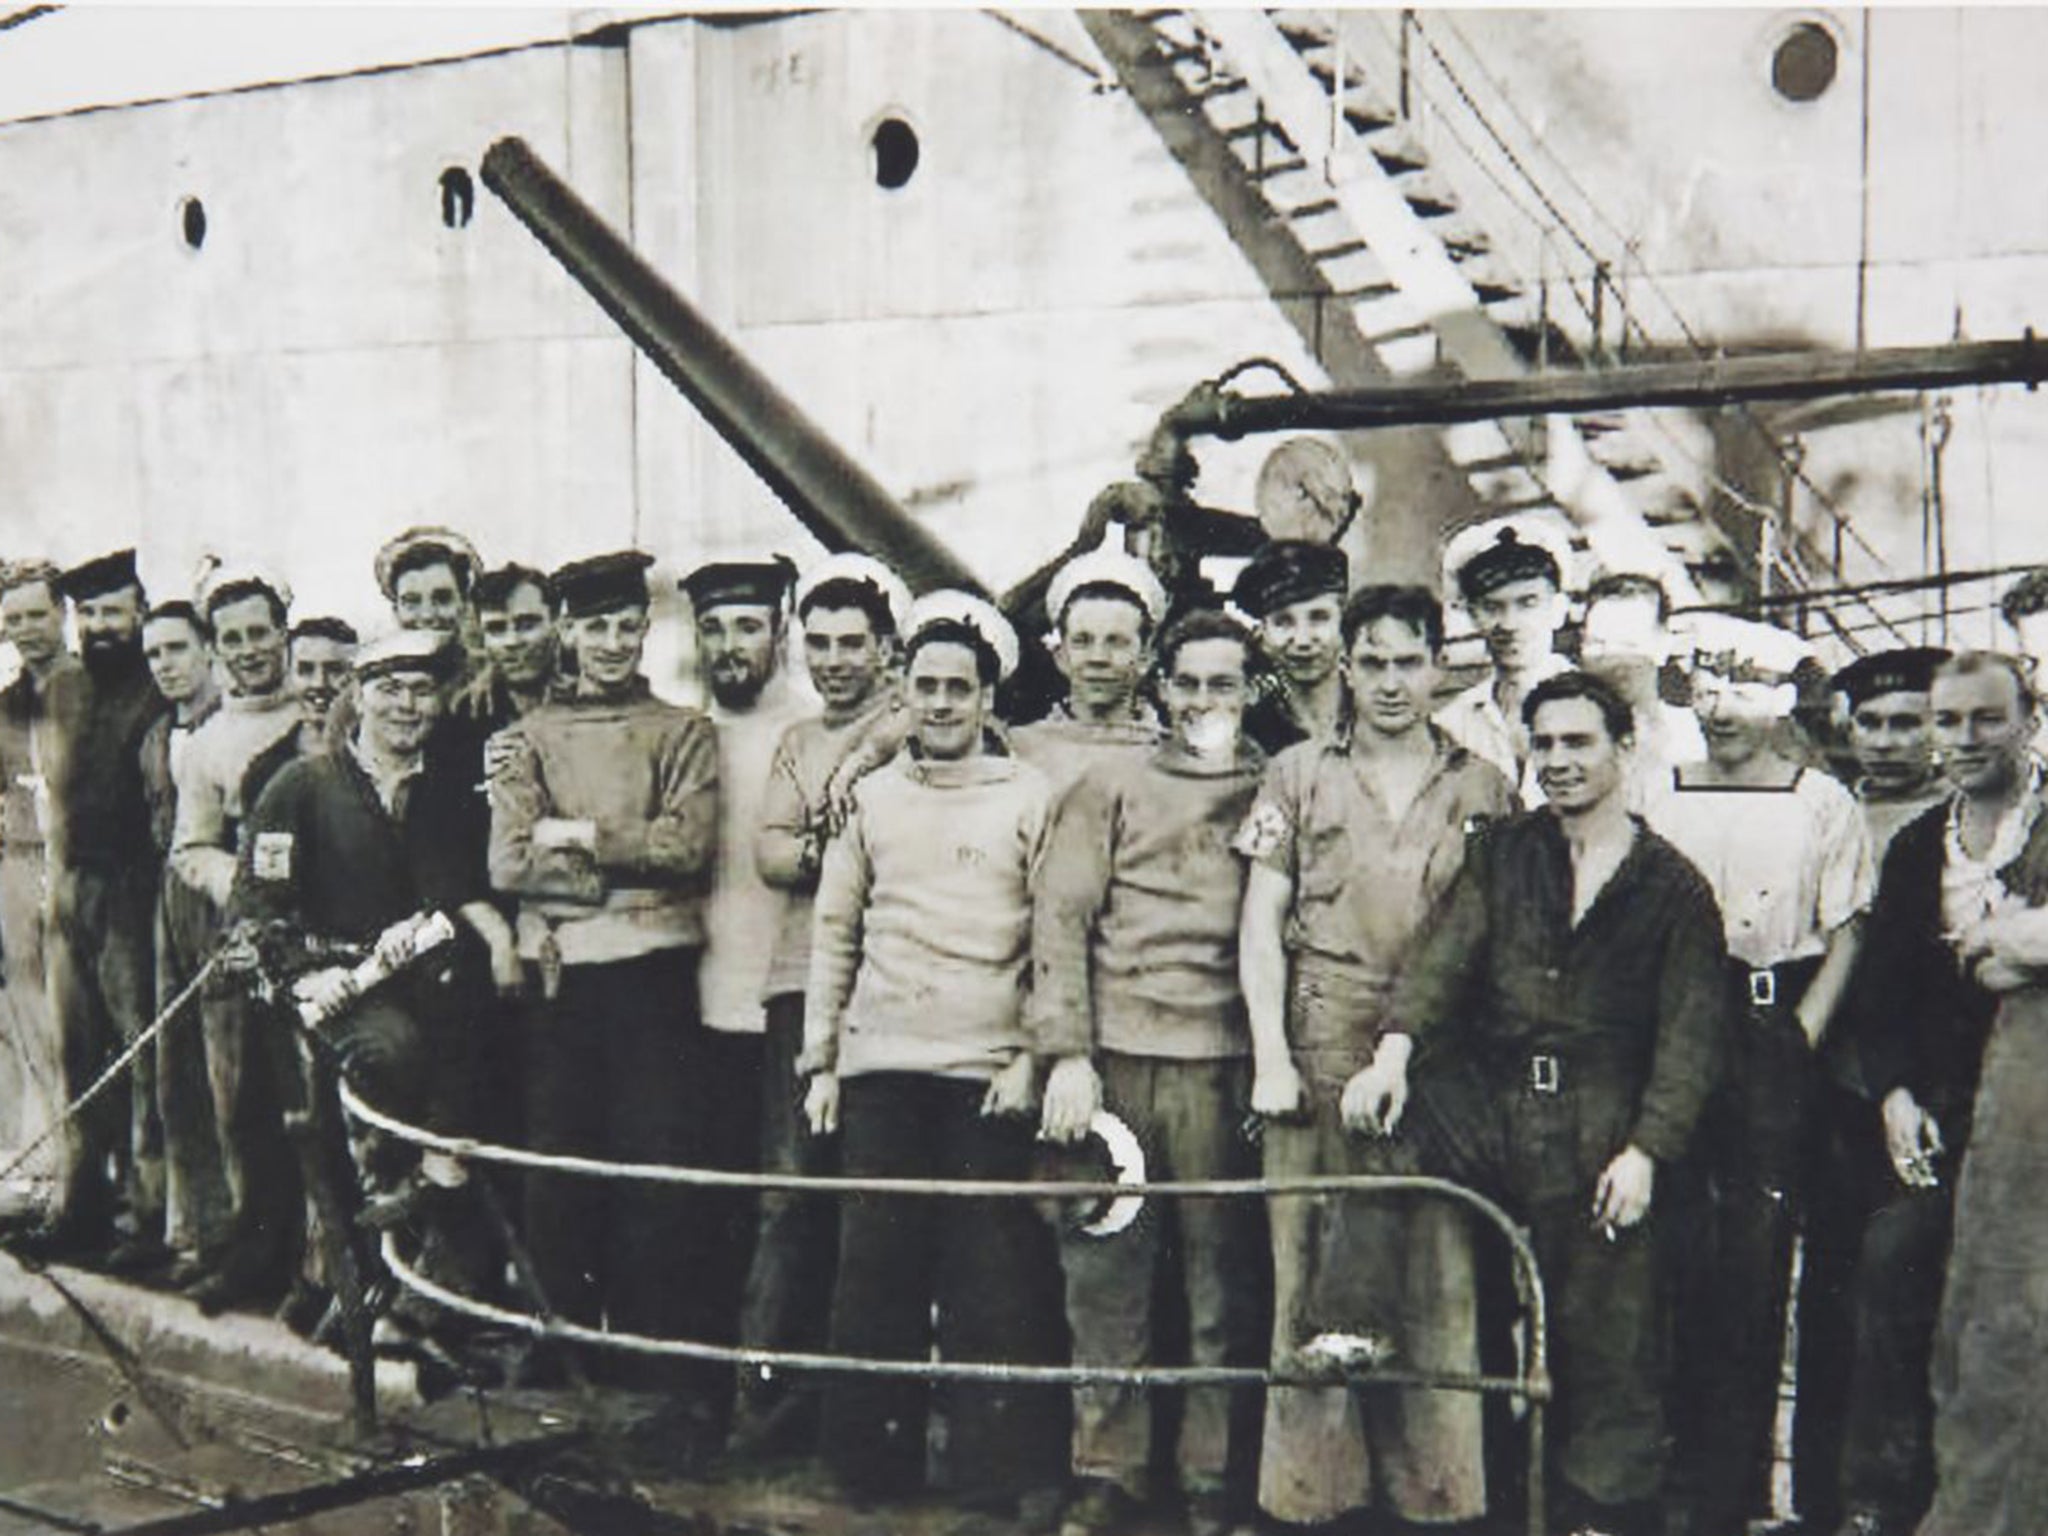 The crew of HMS Saracen